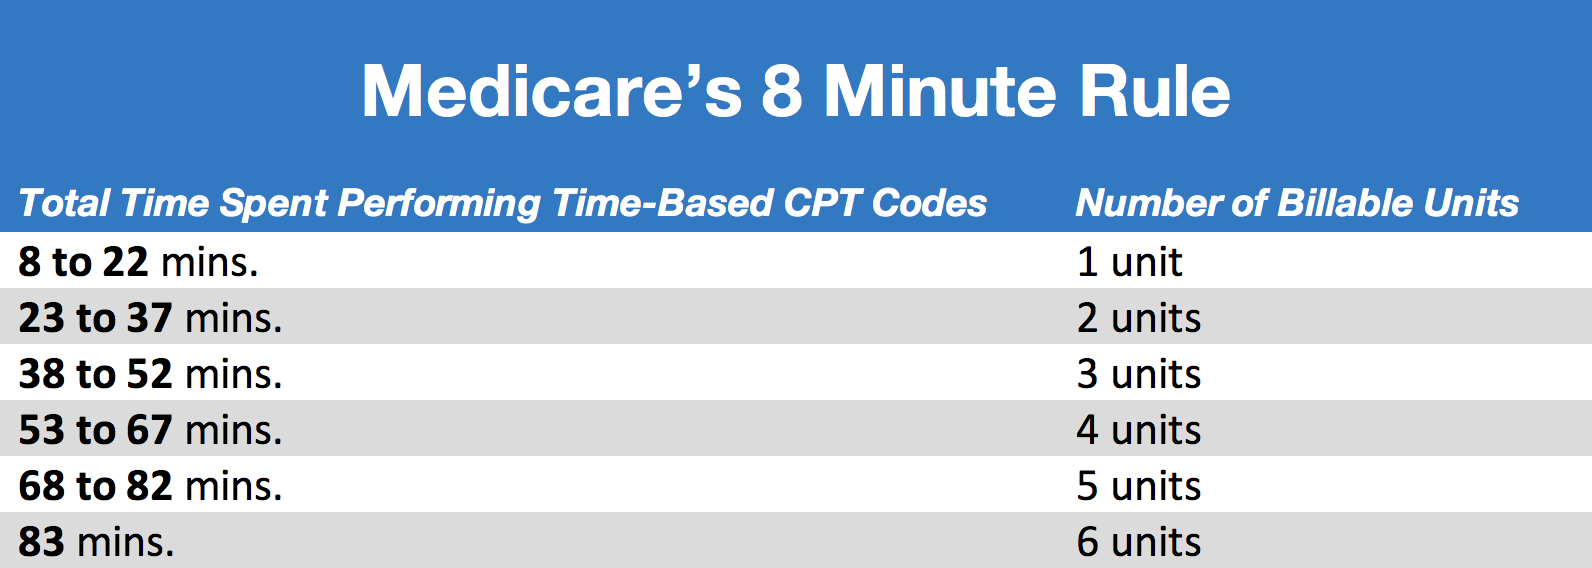 8 Minute Rule Medicare Chart